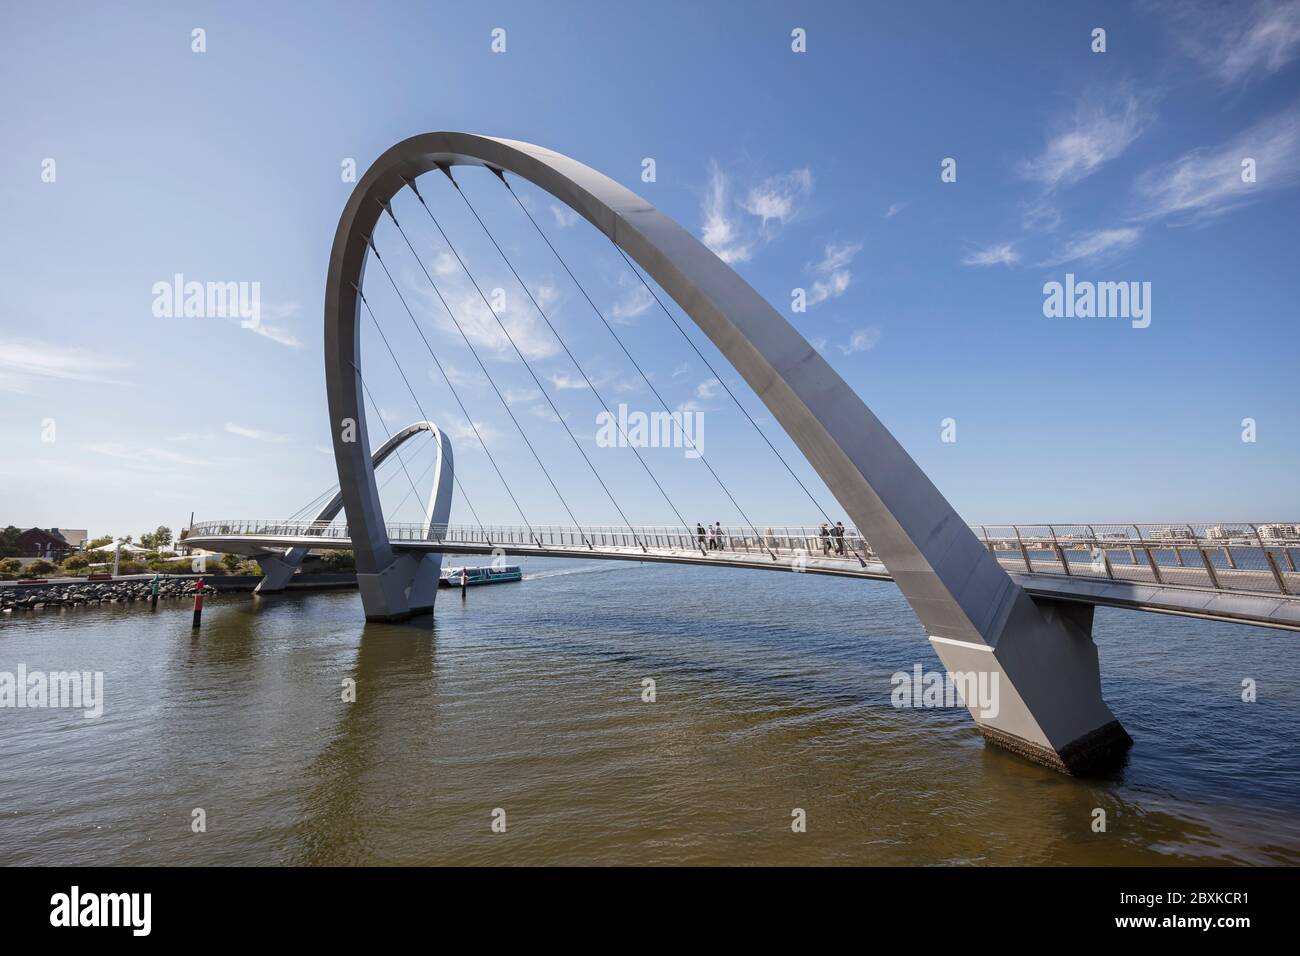 Perth Australia November 5th 2019: View of the iconic curved pedestrian bridge at Elizabeth Quay in Perth, Western Australia Stock Photo